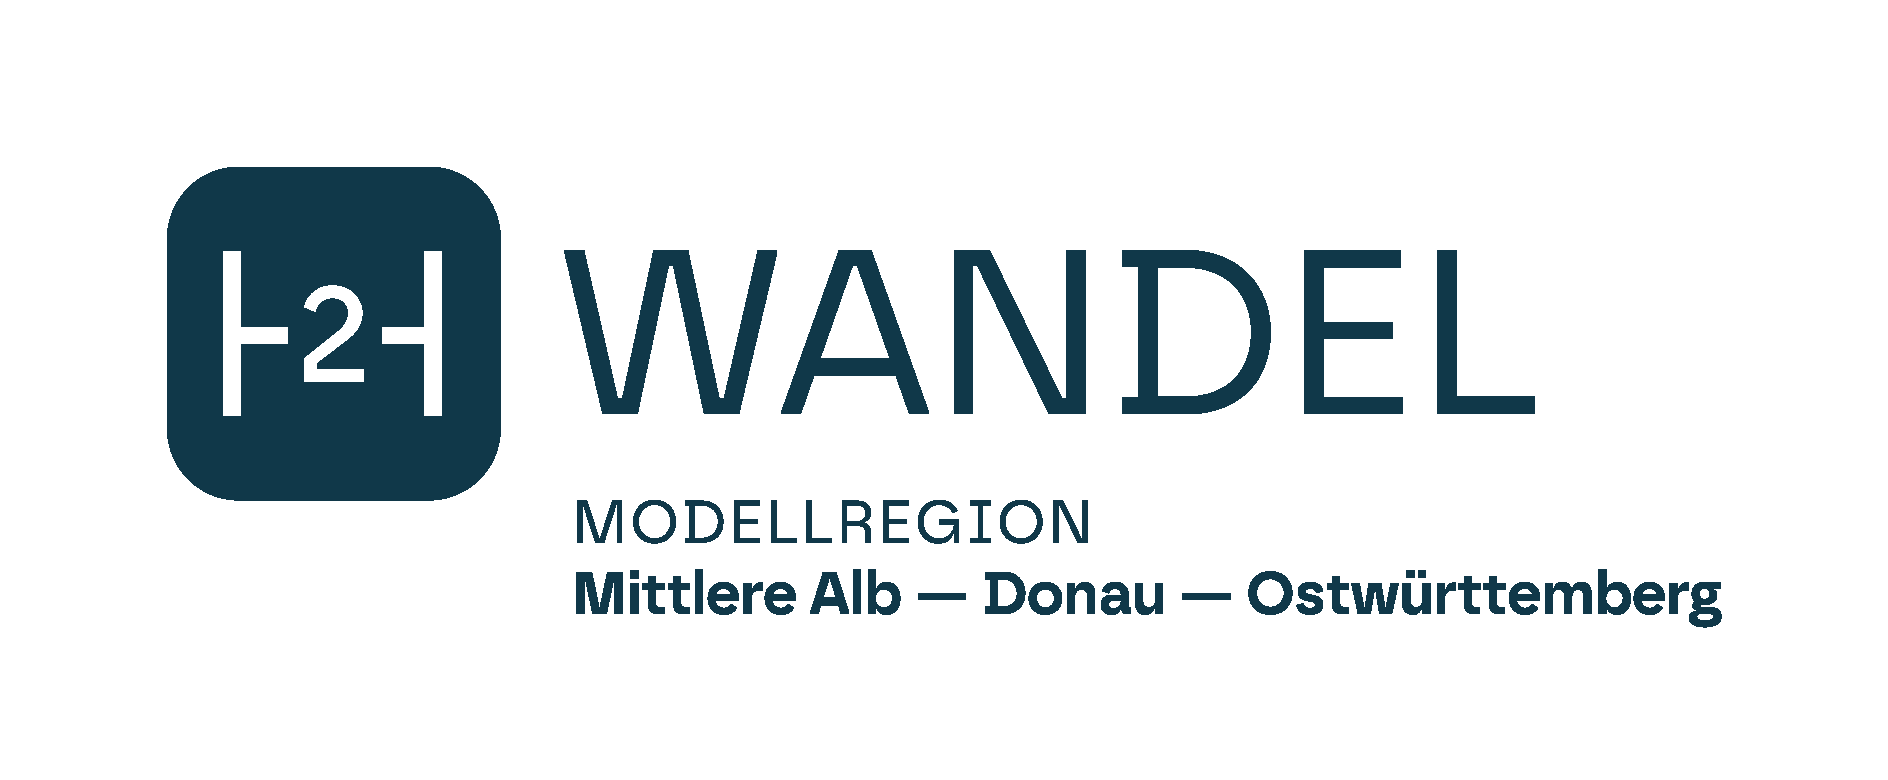 H2-WANDEL Modellregion Mittler Alb- Donau- Ostwürttemberg